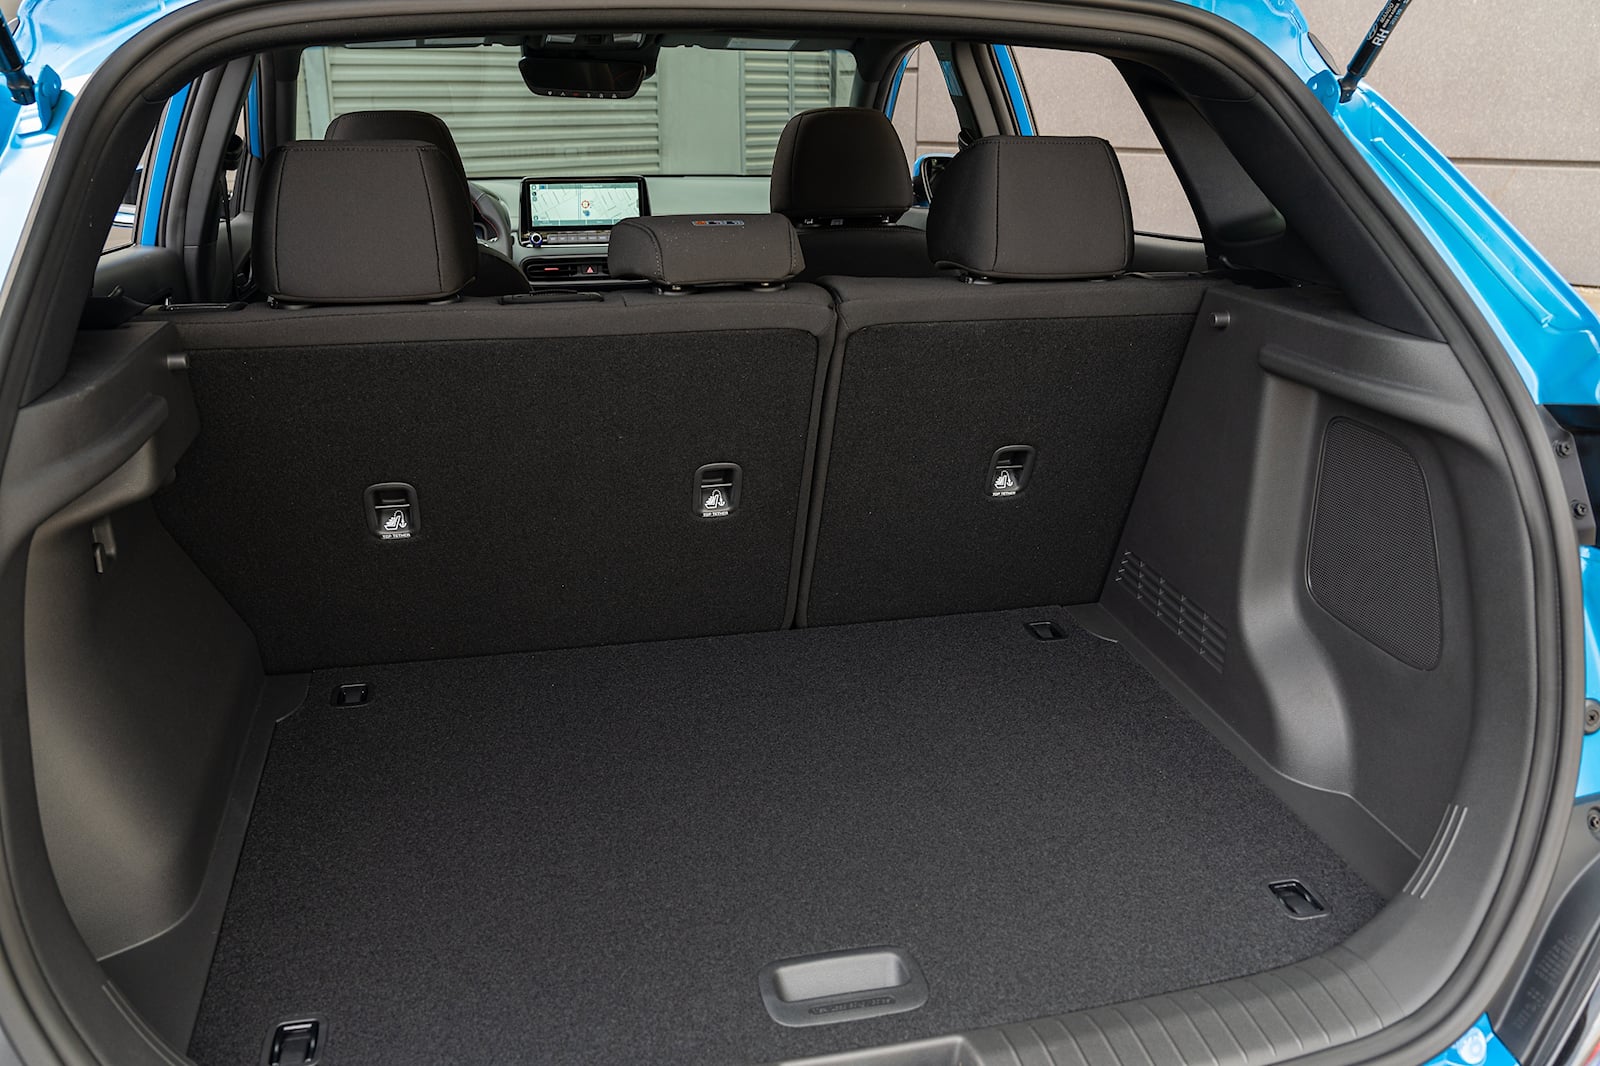 2023 Hyundai Kona Electric Interior Dimensions: Seating, Cargo Space & Trunk  Size - Photos